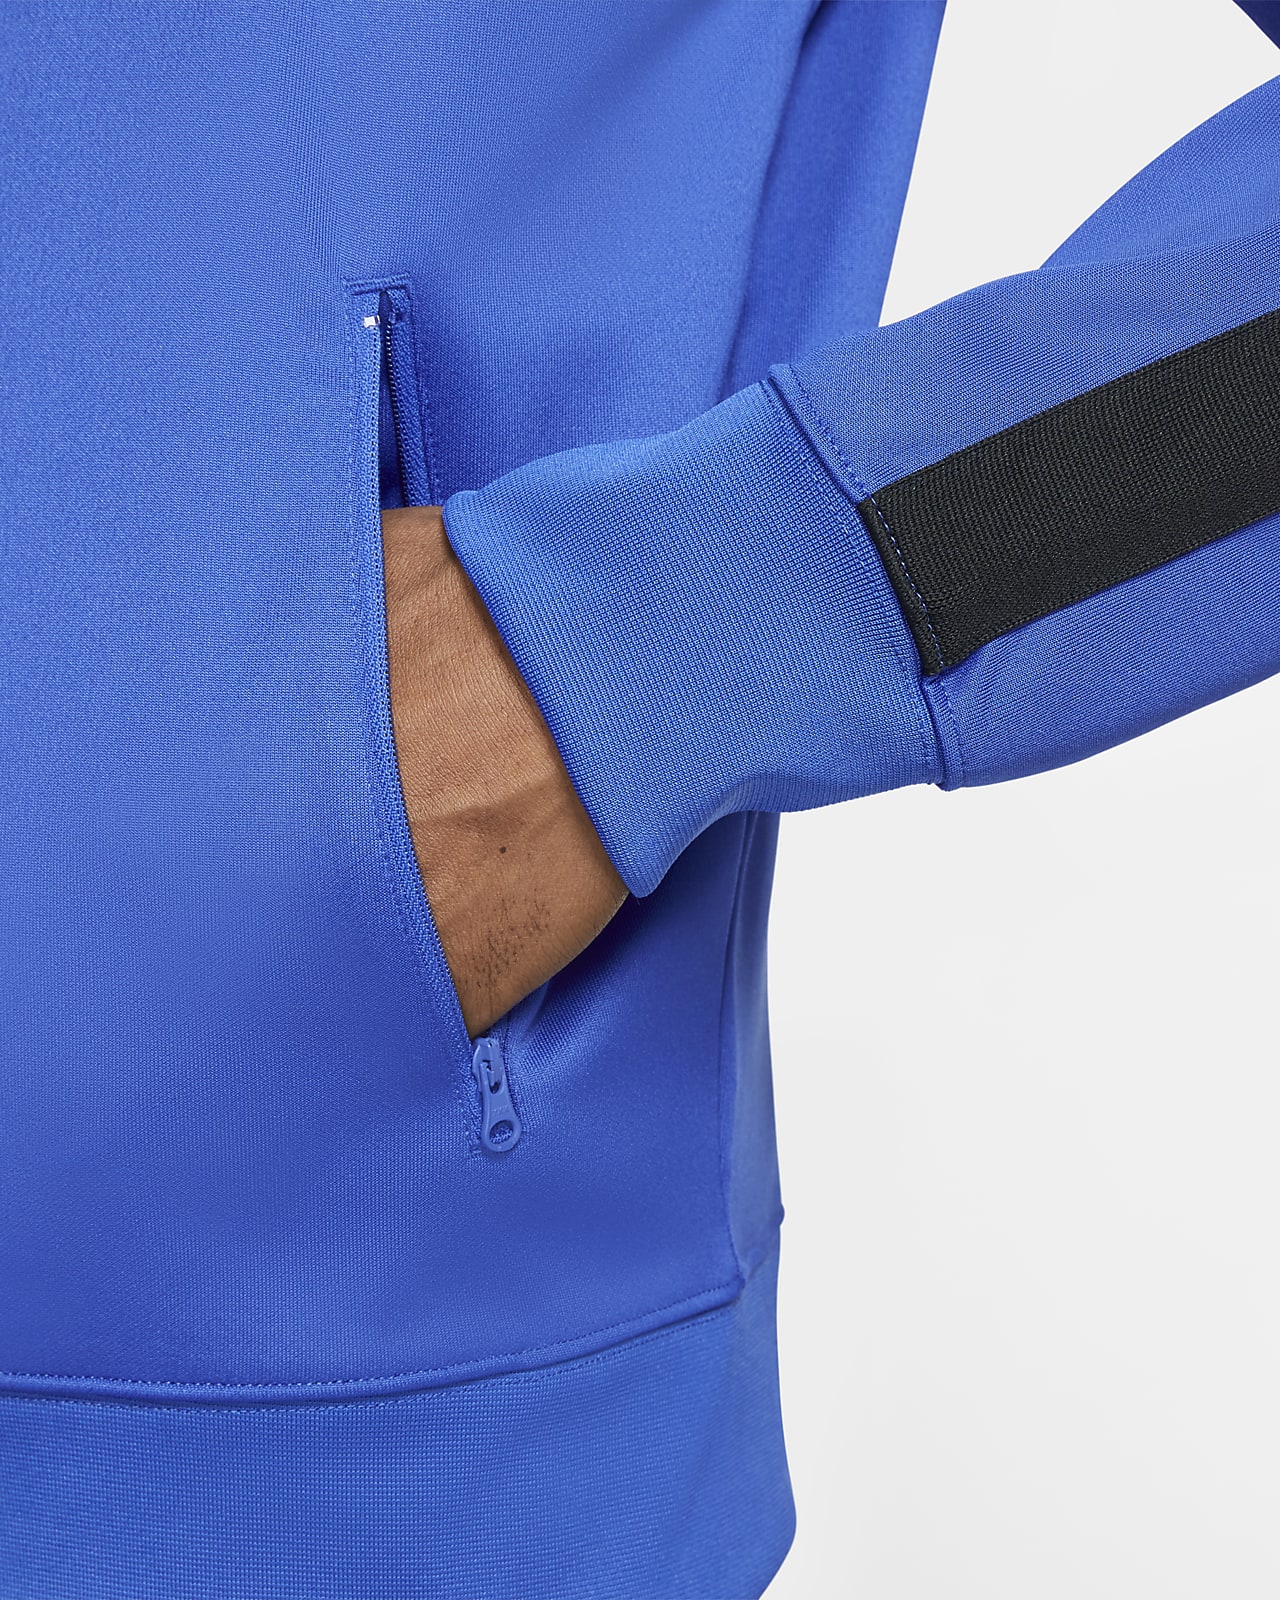 Nike N98 Men's Knit Warm-Up Jacket.